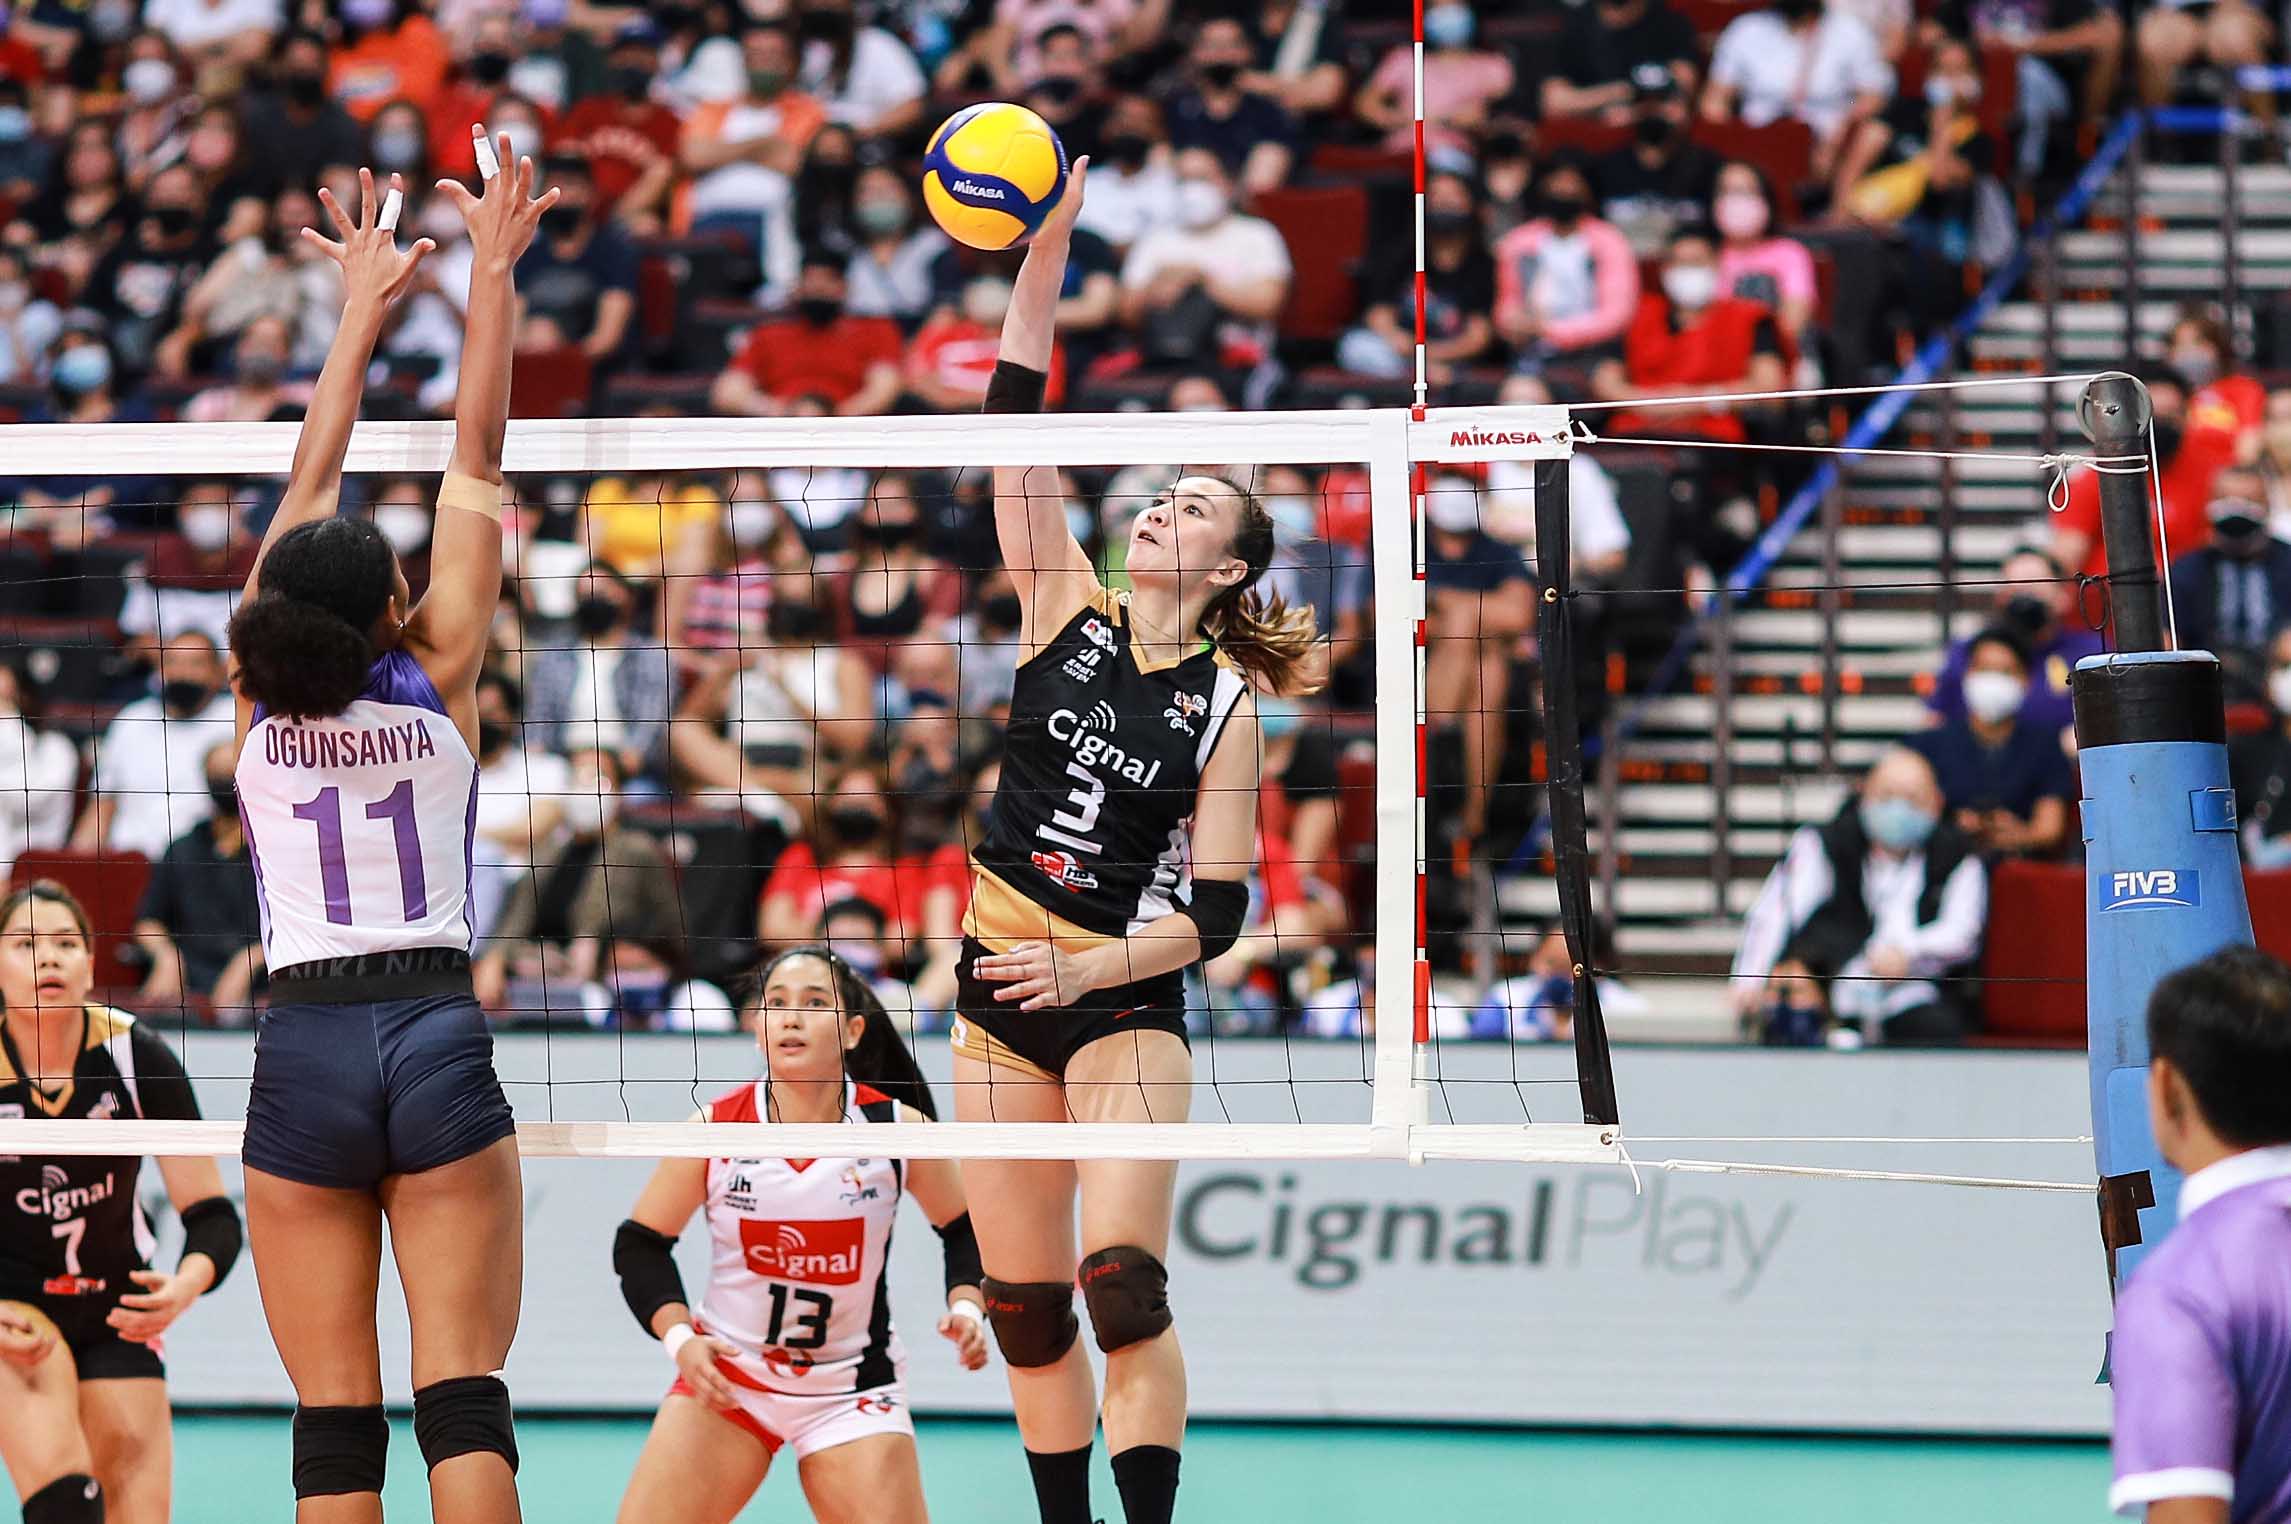 2022-PVL-Choco-vs-Cignal-battle-for-third-game-1-rachel-daquis-5 Delos Santos lauds Daquis' fighting spirit as she plays through injury News PVL Volleyball  - philippine sports news